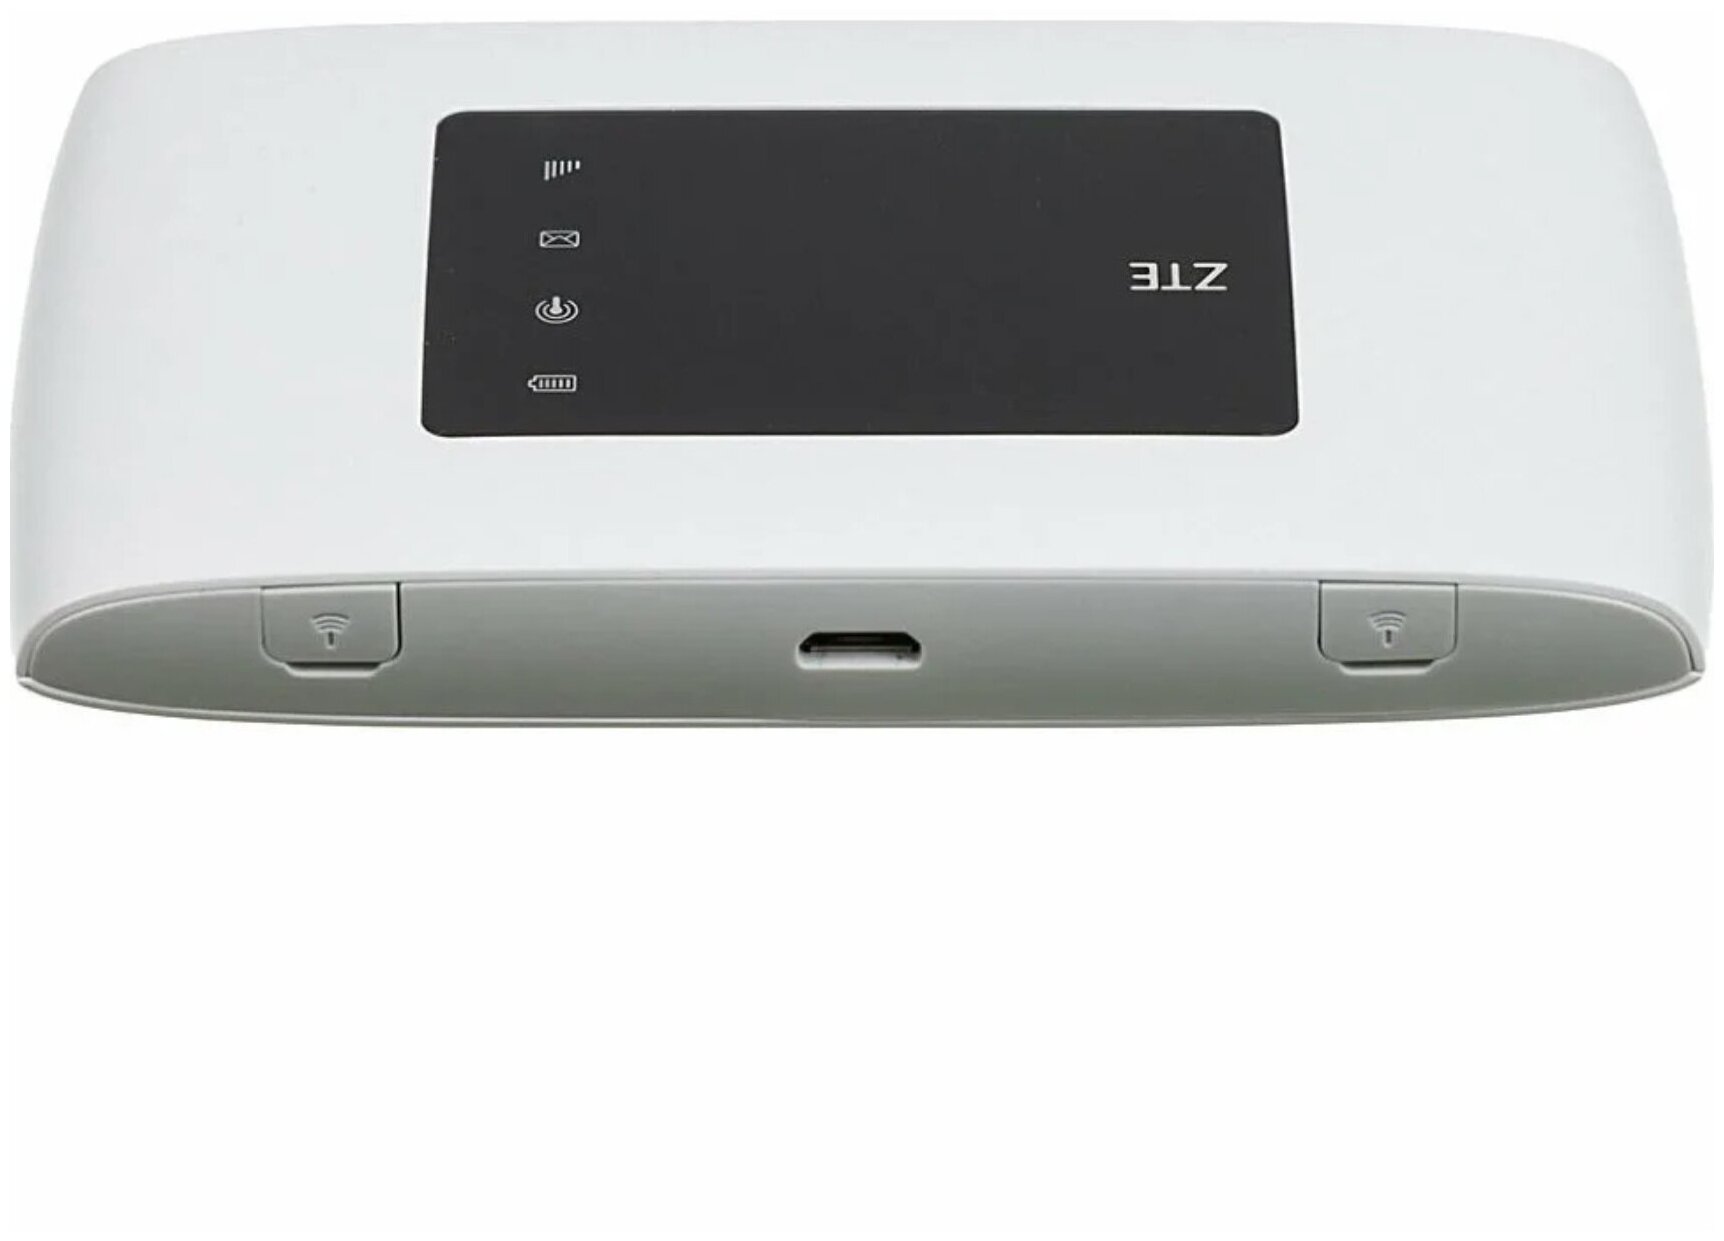 Переносной, карманный 3G/ 4G LTE WiFi роутер ZTE mf920 с аккумуляторной батареей.